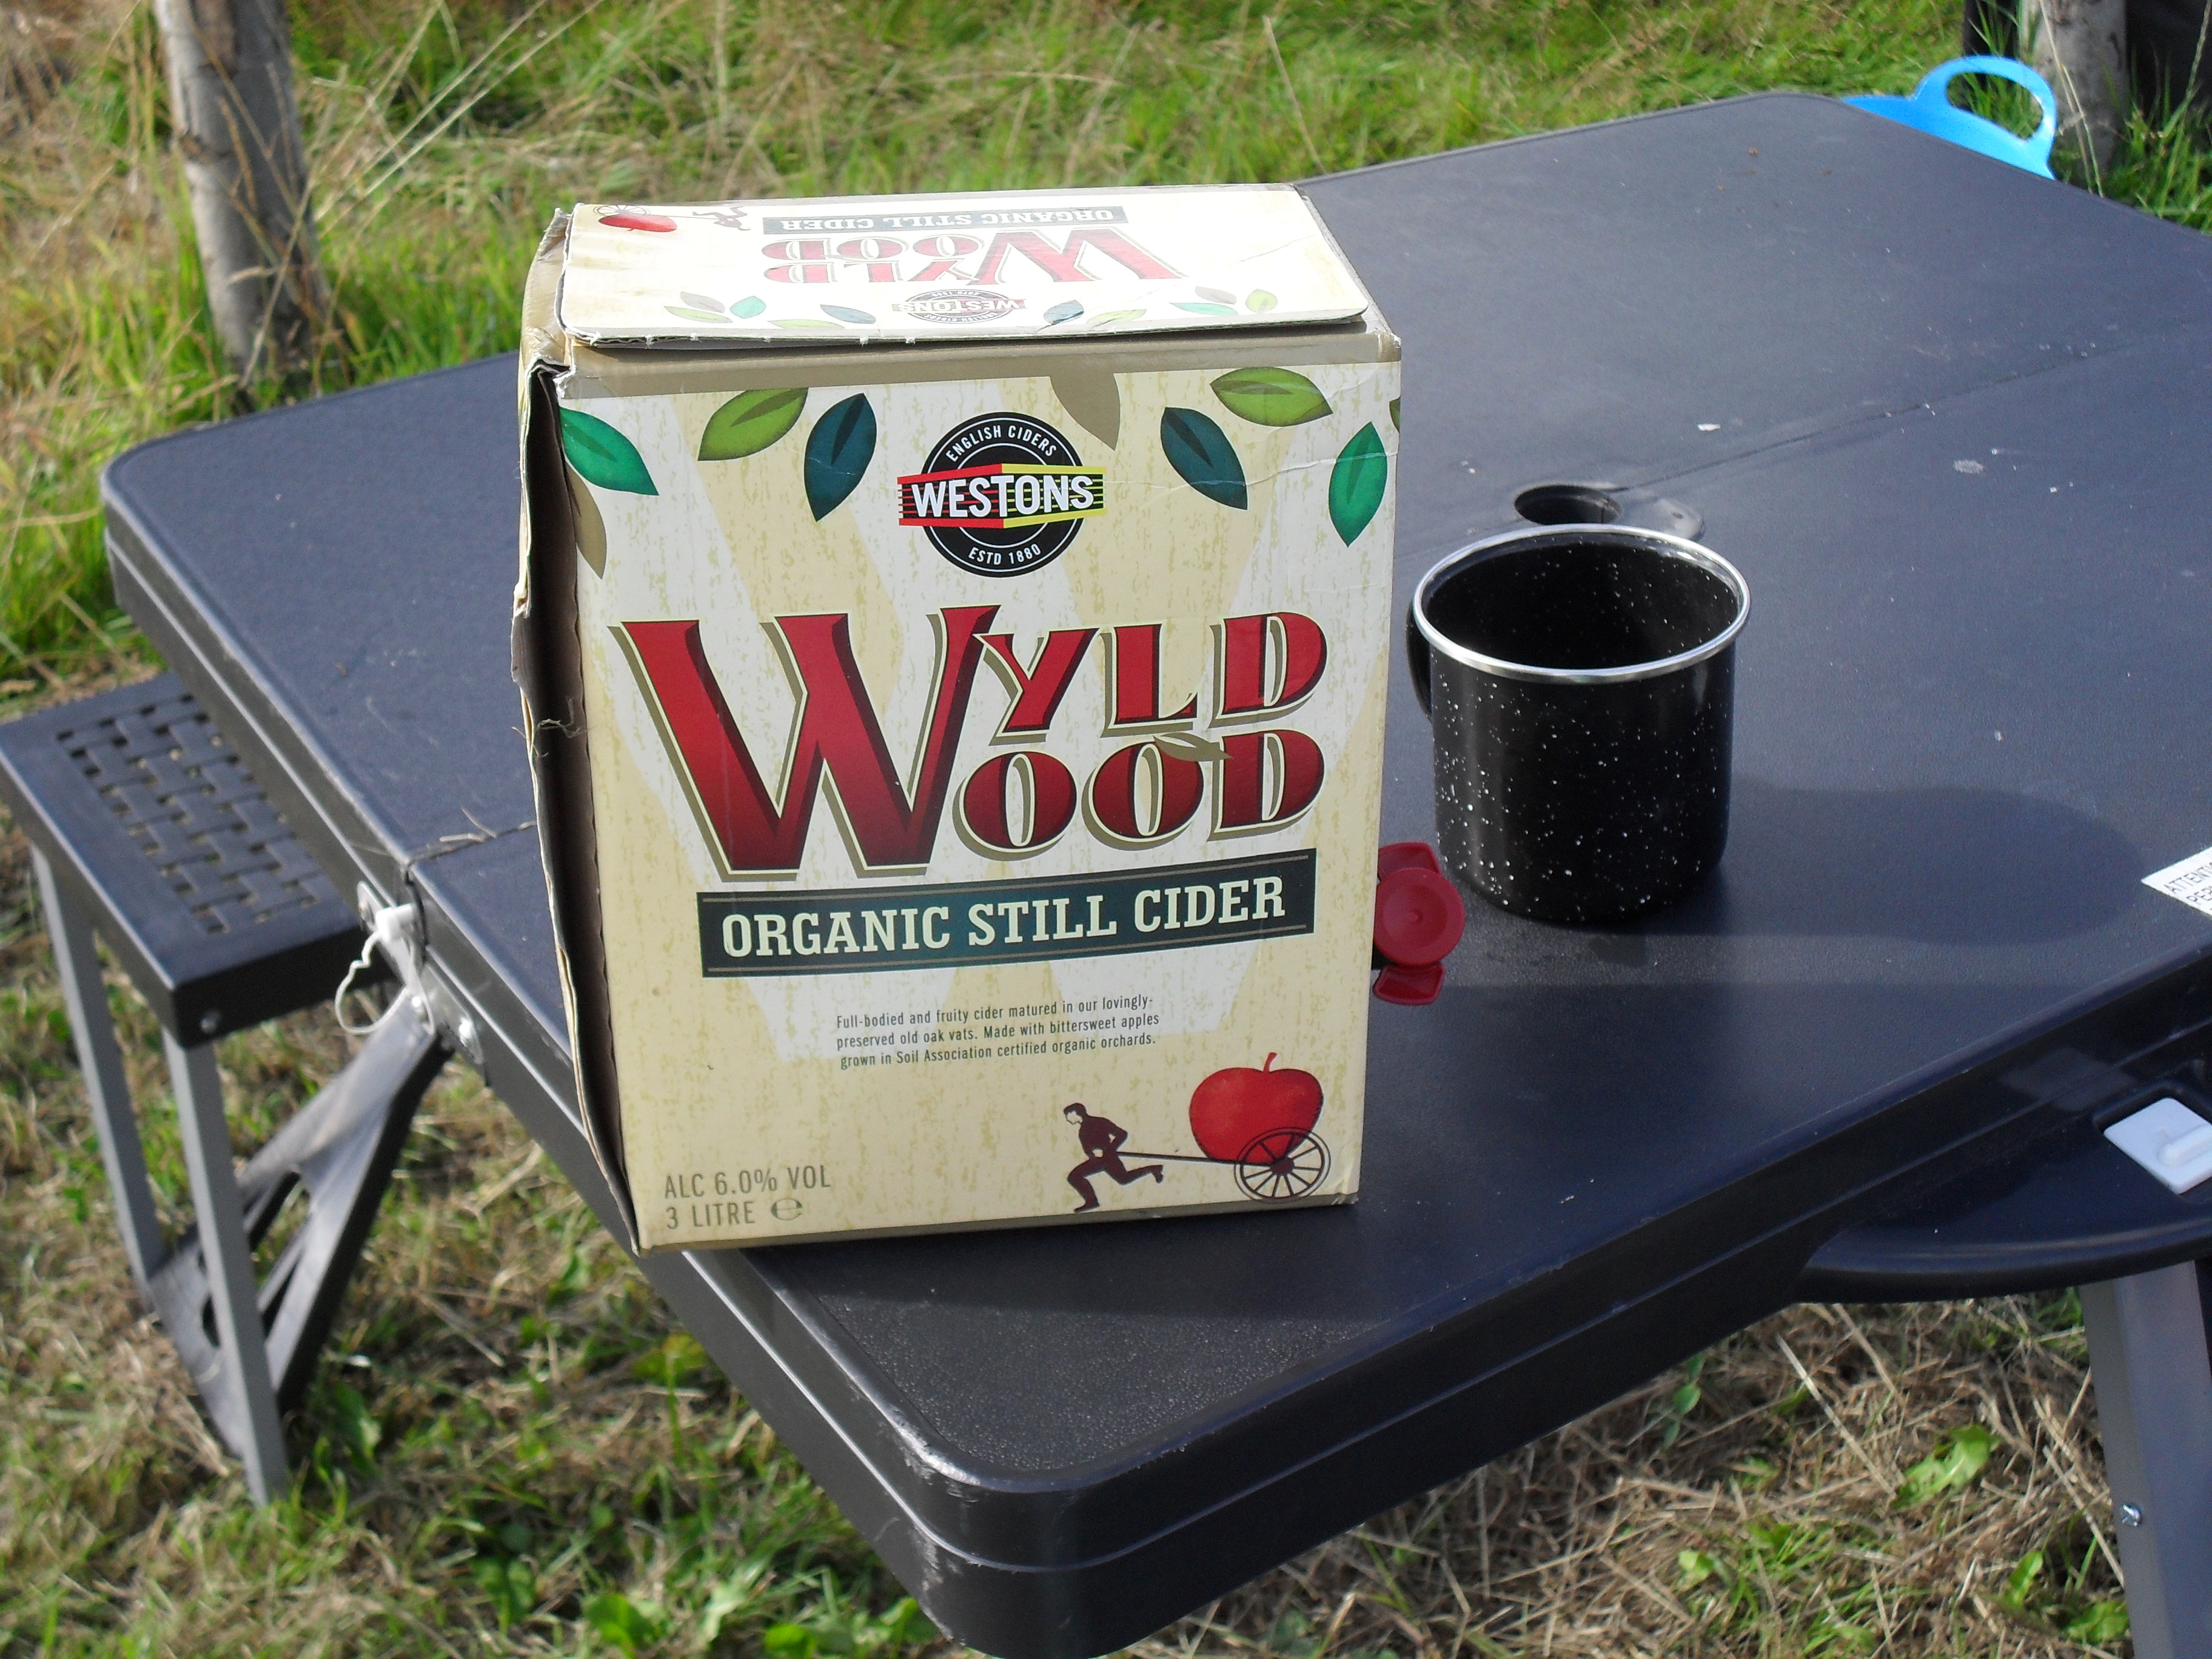 Wyld wood Cider